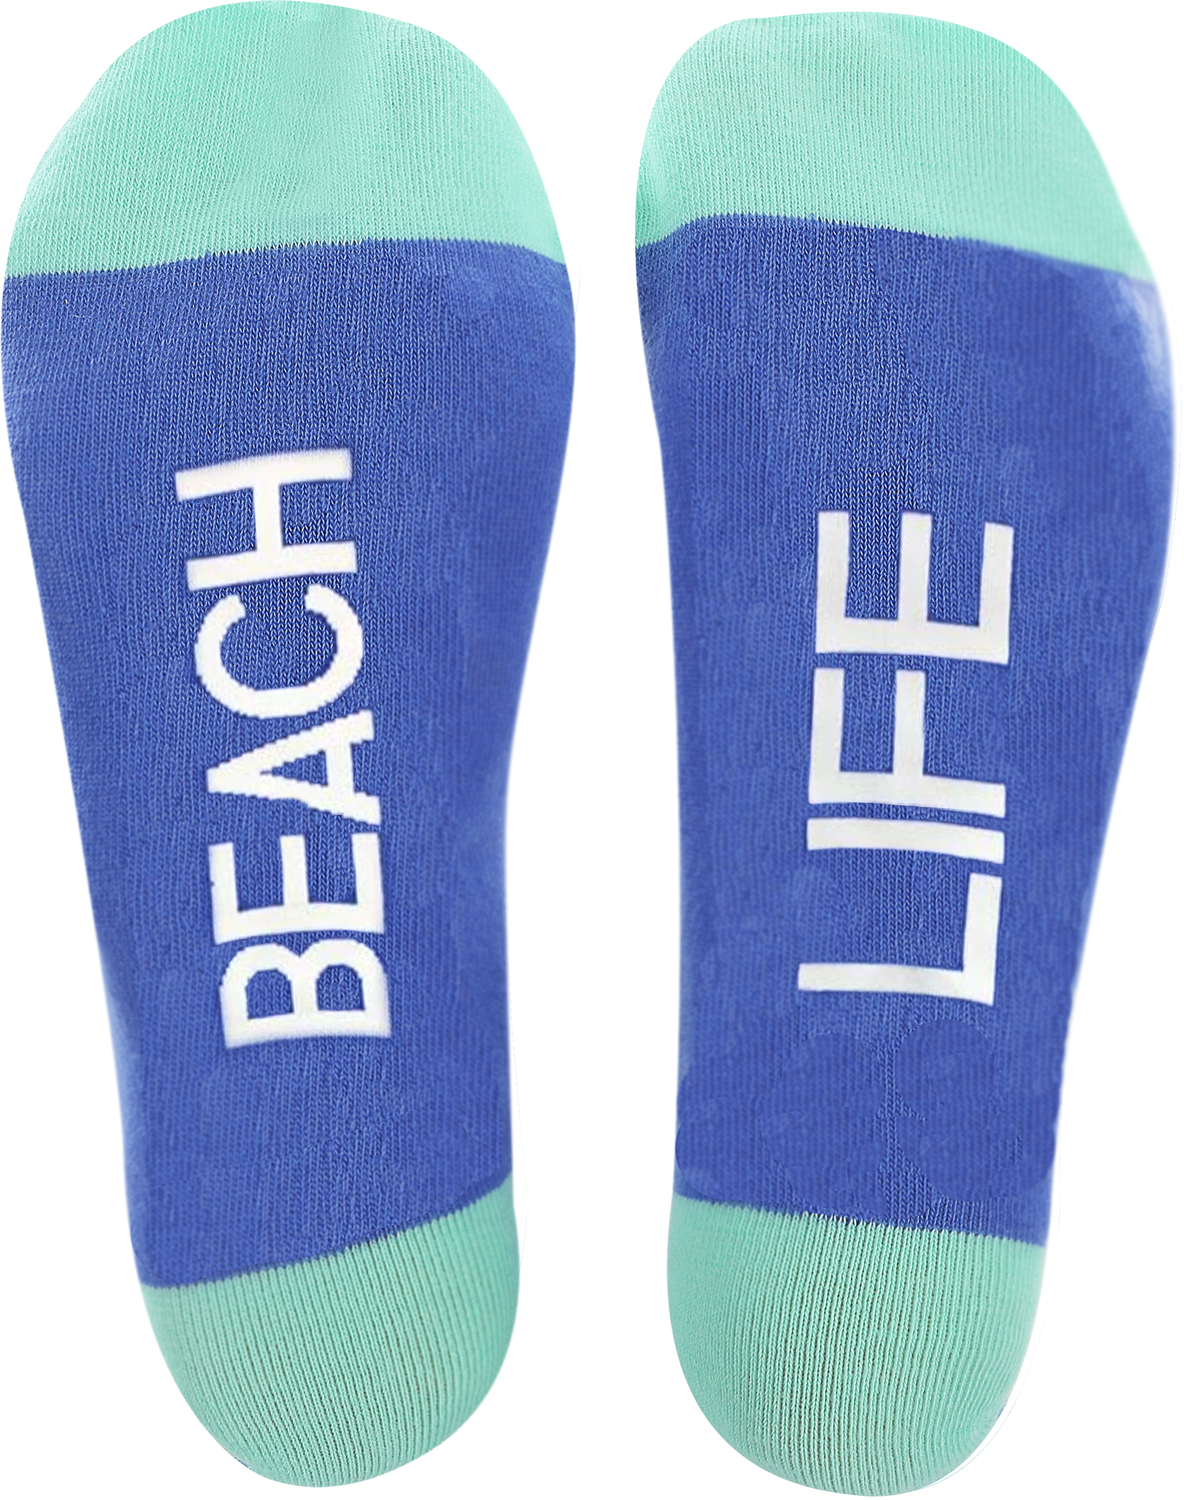 Beach Life by We People - Beach Life - S/M Unisex Socks